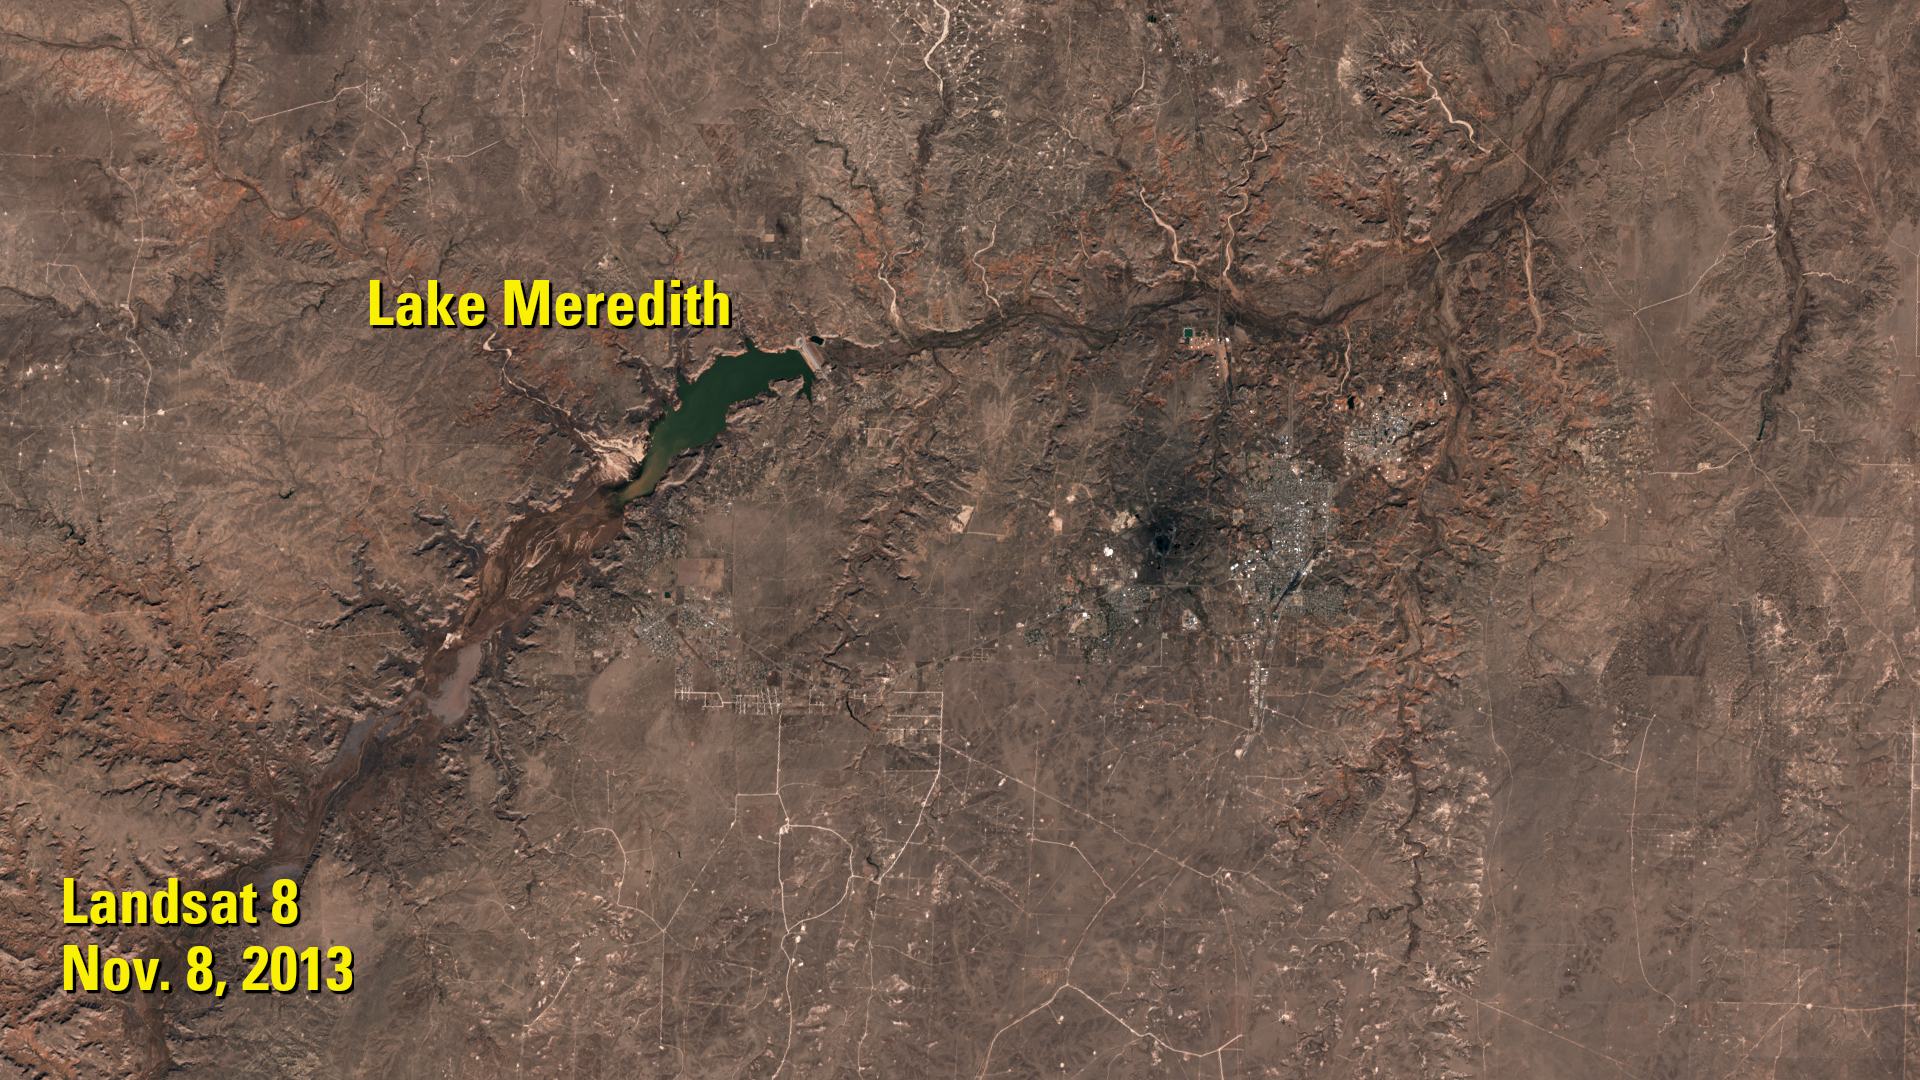 Landsat image of Lake Meredith in 2013